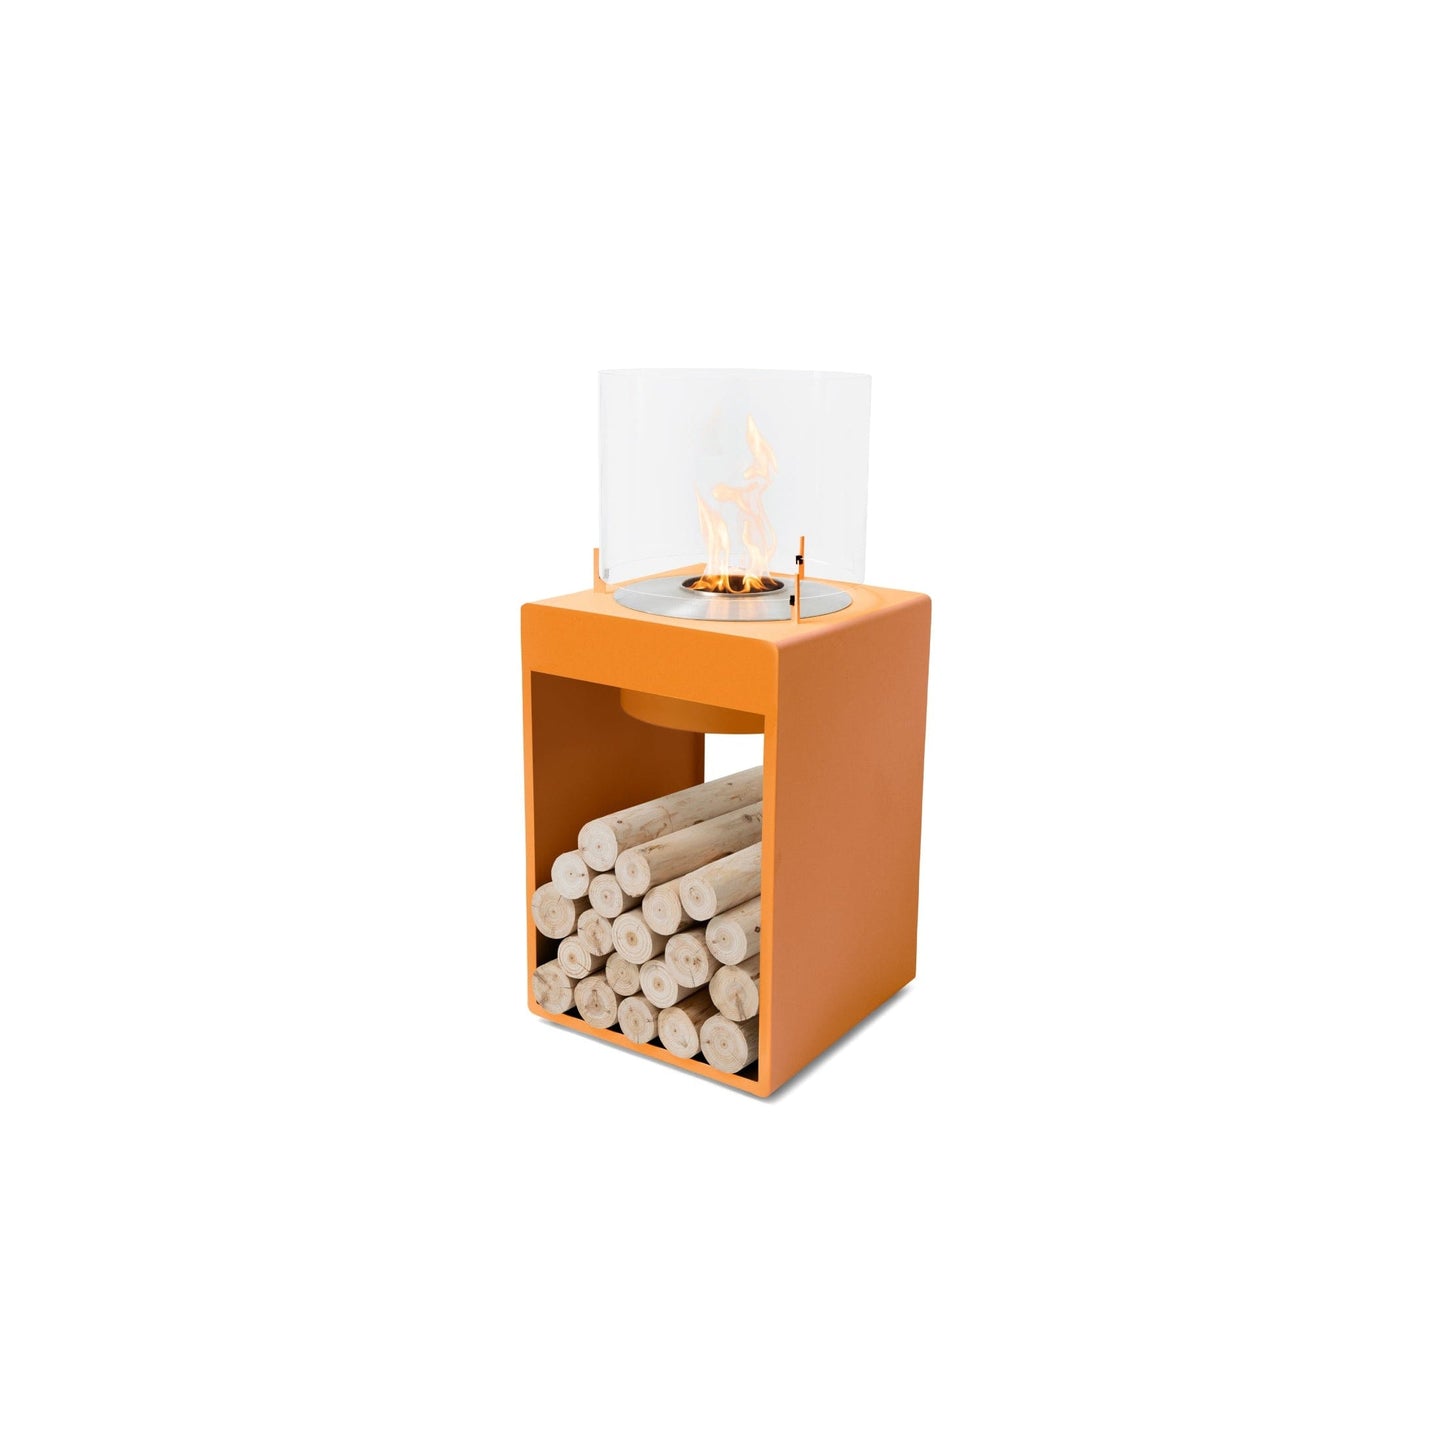 EcoSmart Fire POP 8T 39" Orange Freestanding Designer Fireplace with Stainless Steel Burner by MAD Design Group